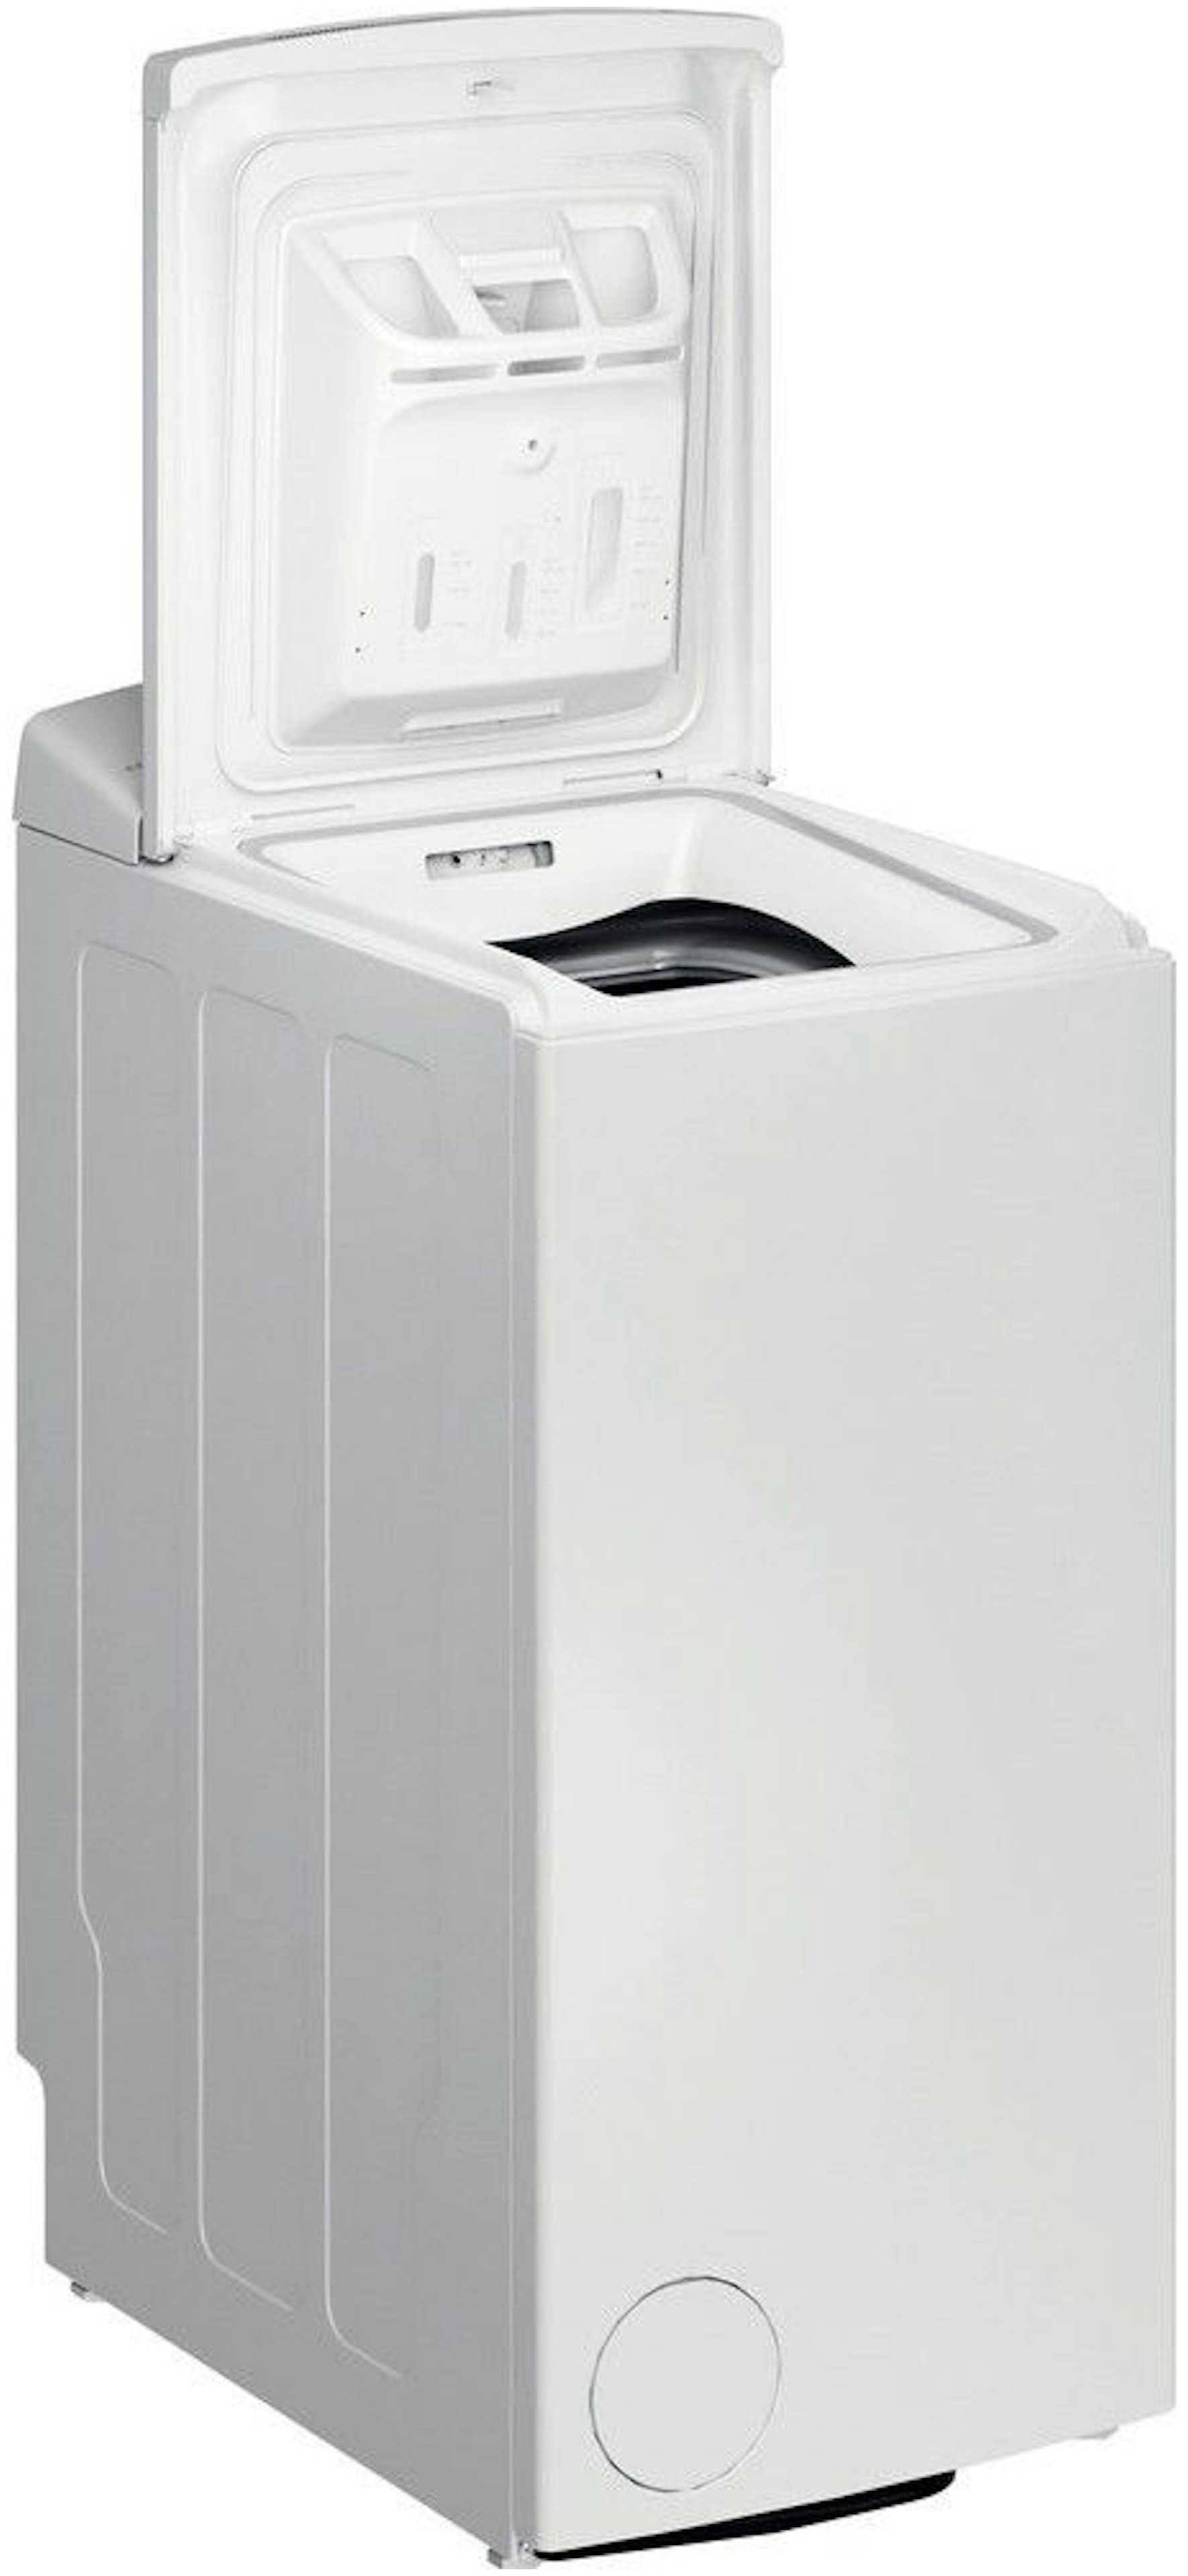 Whirlpool wasmachine  TDLR 65230L BE afbeelding 4